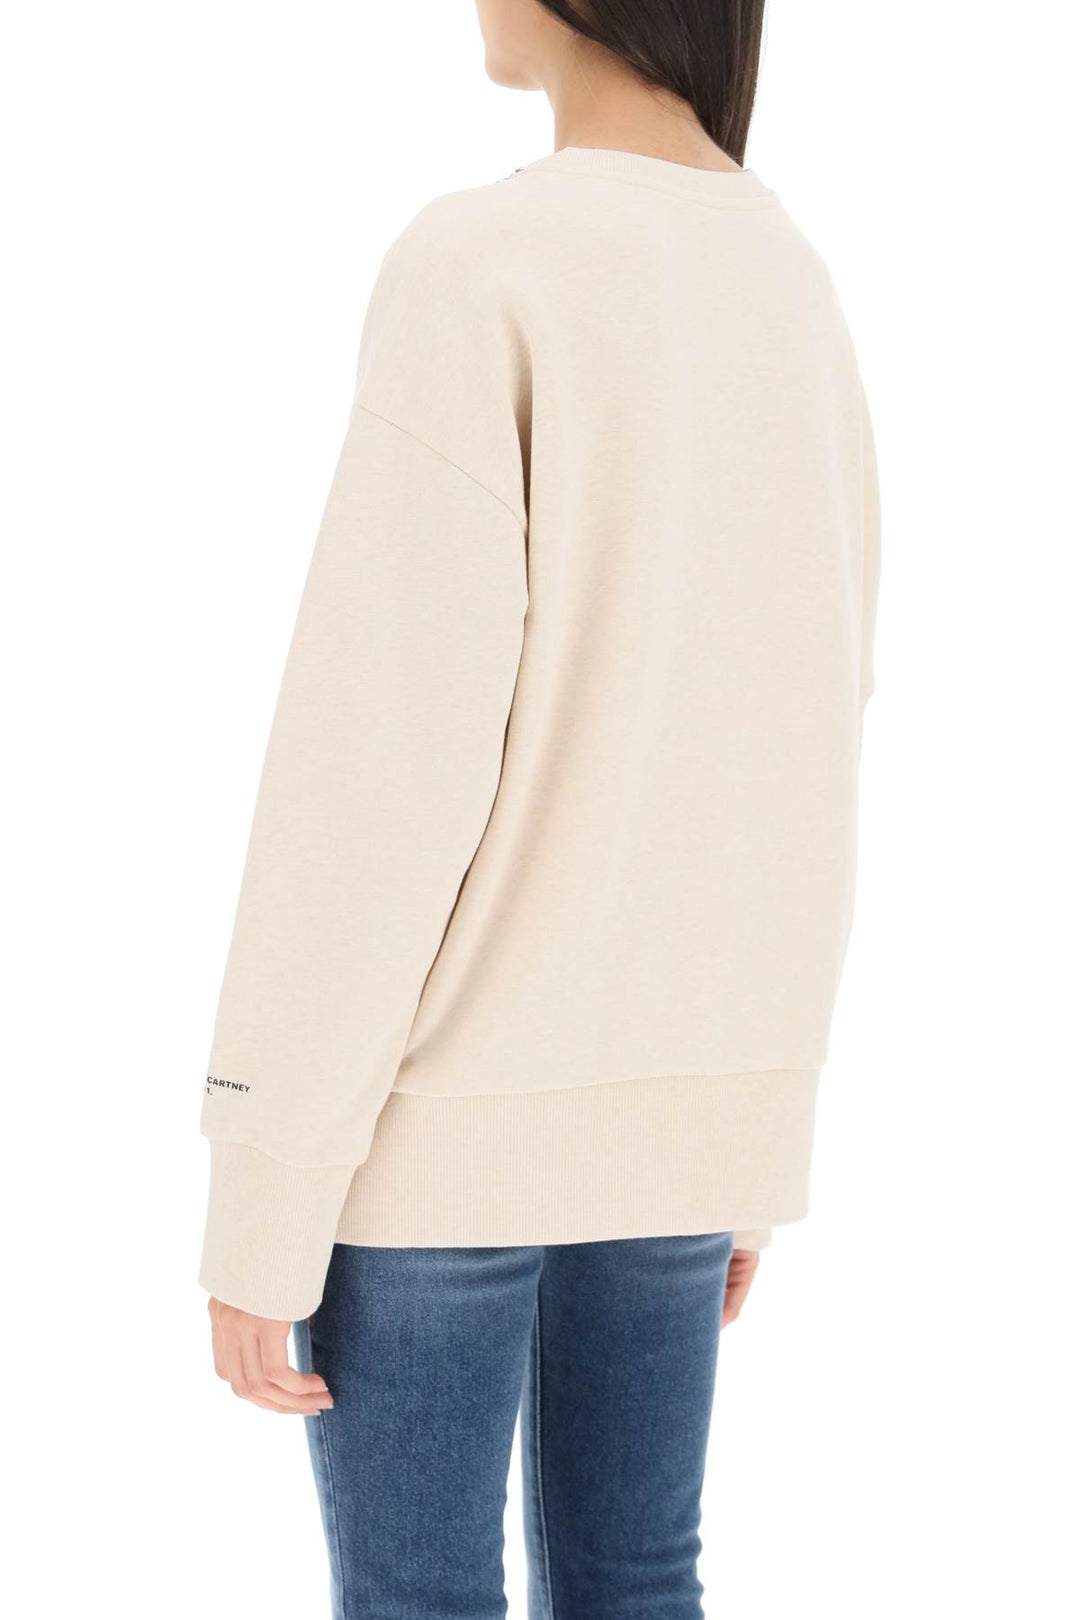 Stella Mc Cartney 'Falabella' Sweater   Beige